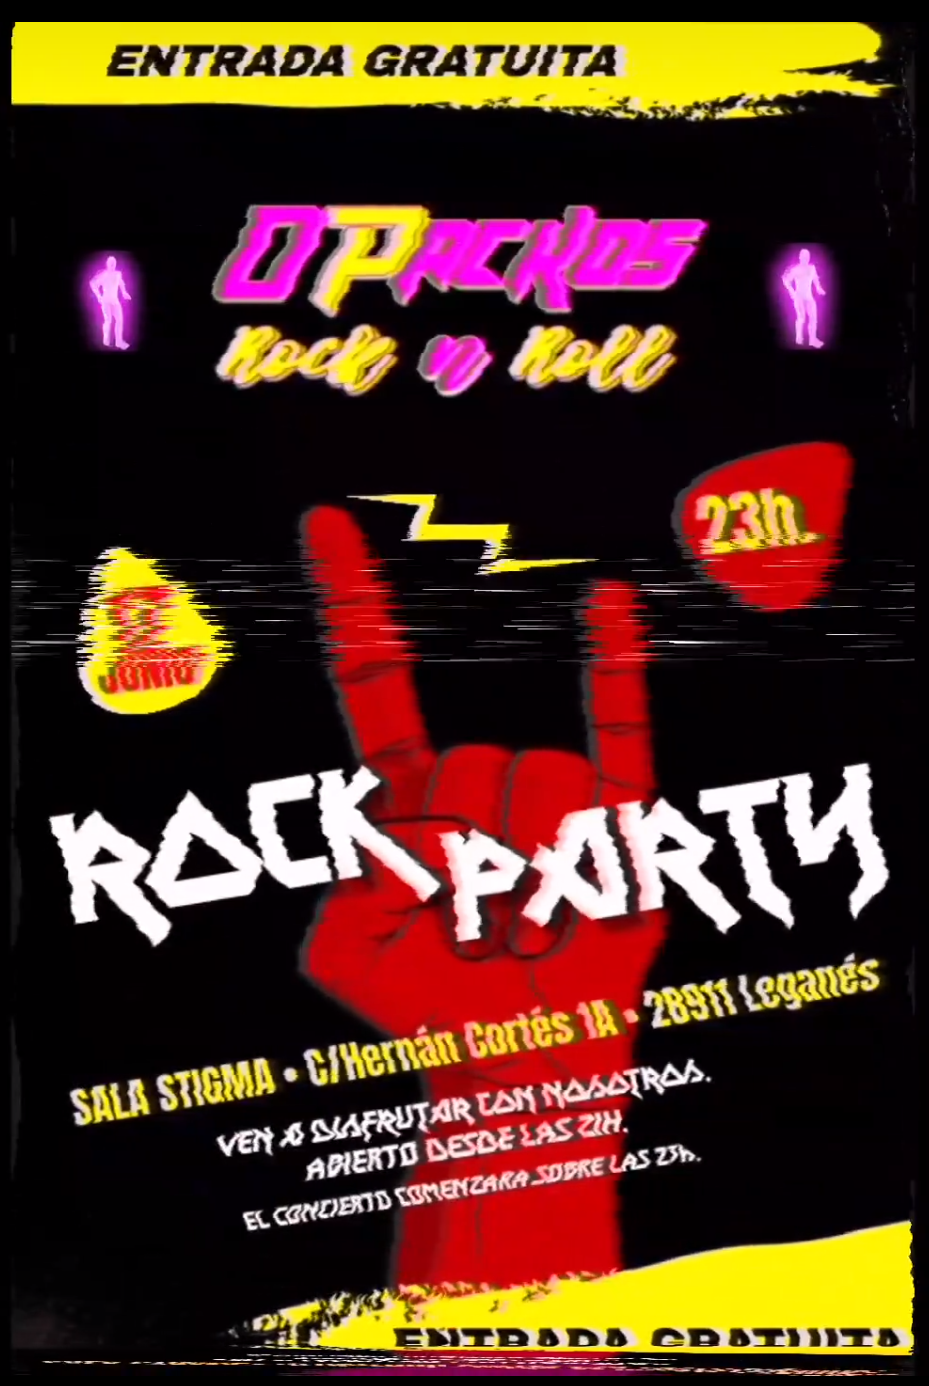 Rock Party en Sala Stigma